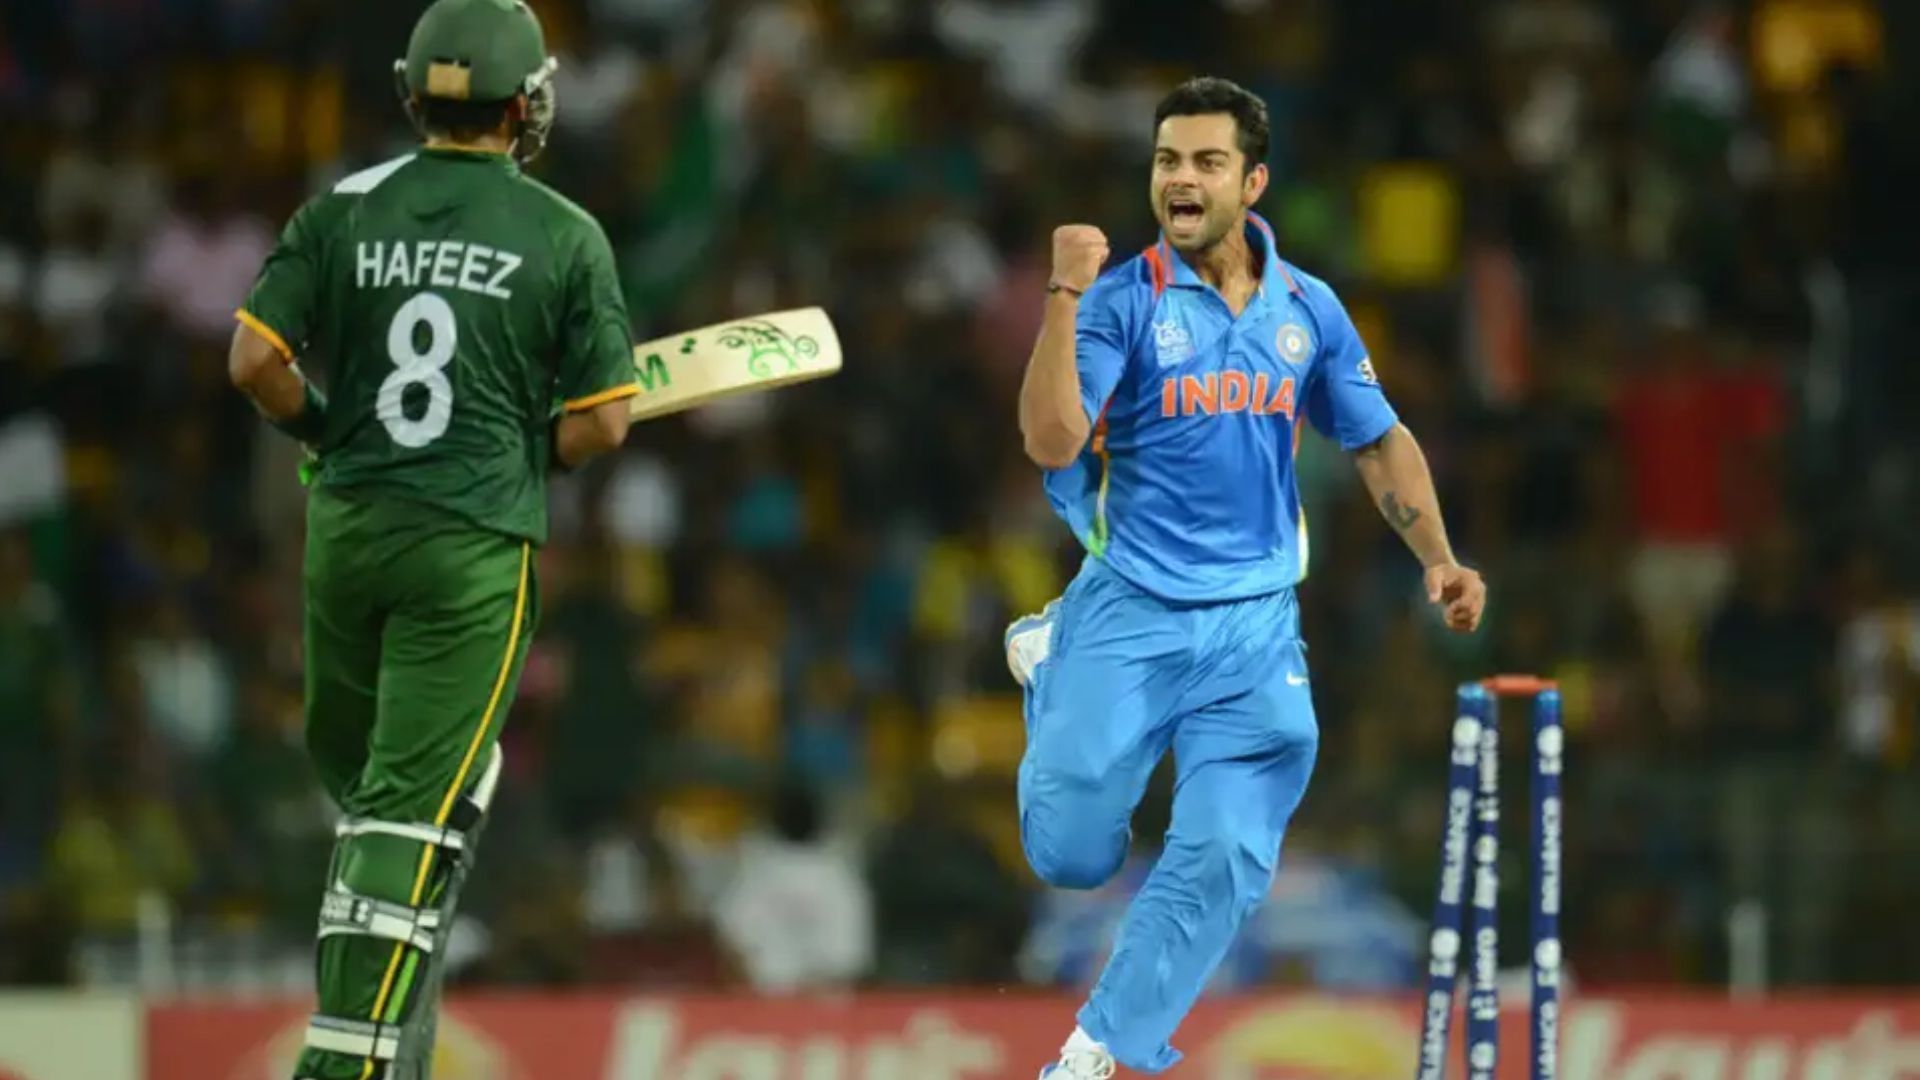 Virat Kohli had dismissed Mohammad Hafeez during the 2012 T20 World Cup (P.C.:Philip Brown)